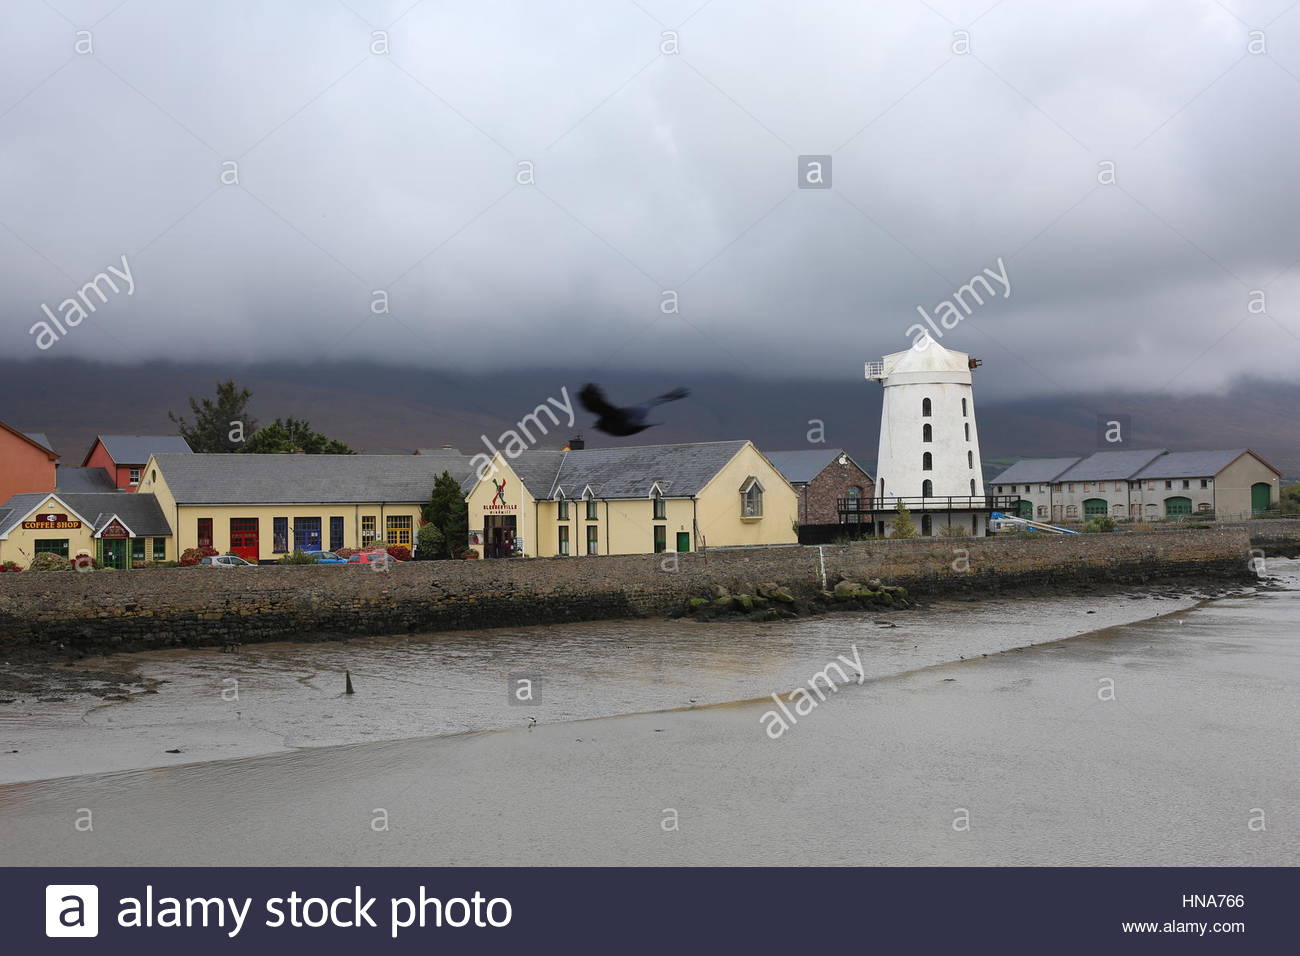 Ireland in all its beauty: Stock Photo